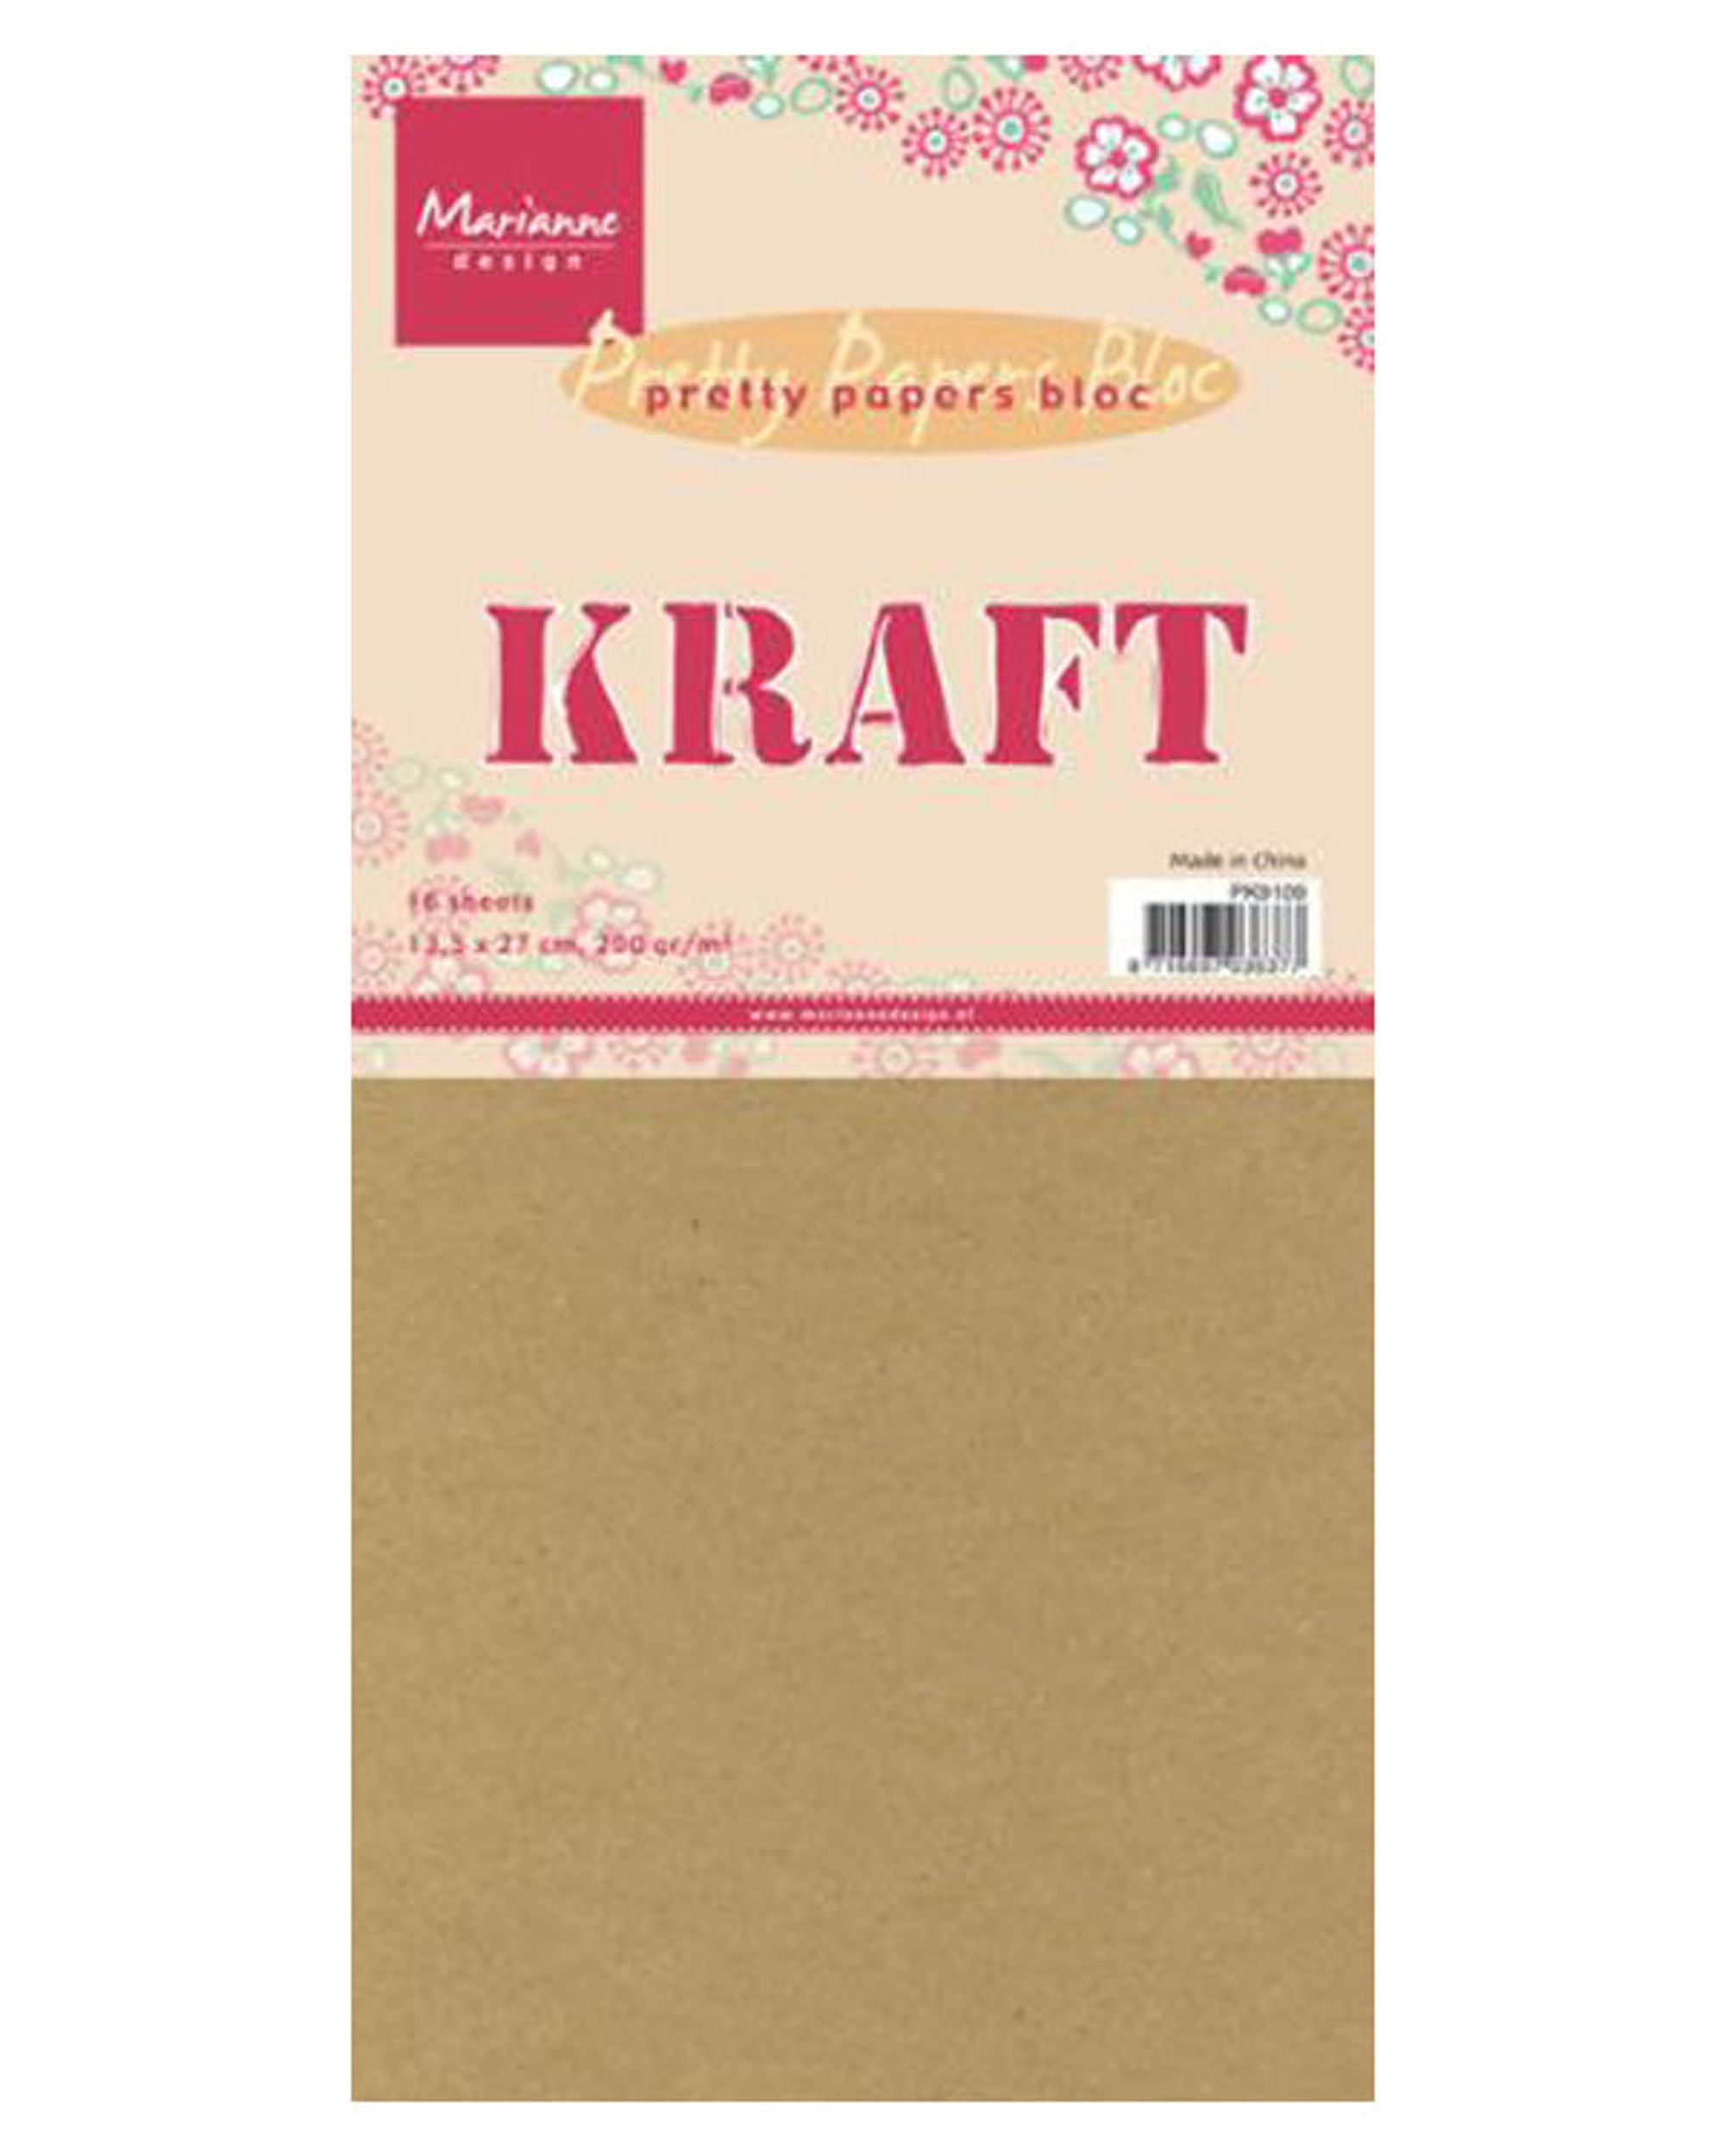 Kraft paper